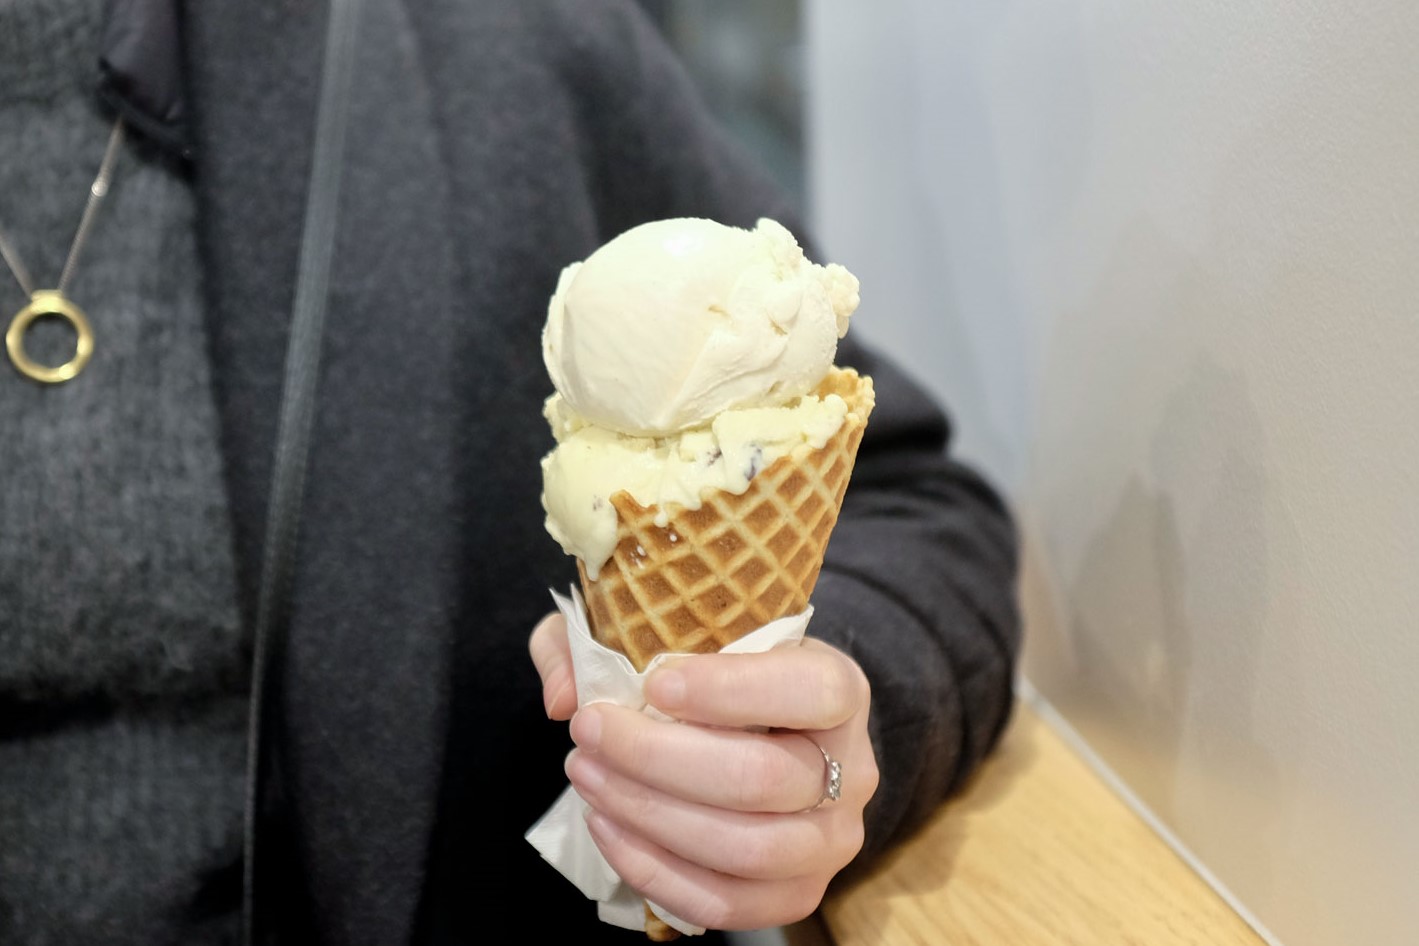 A close up of Alyssa holding an ice cream cone